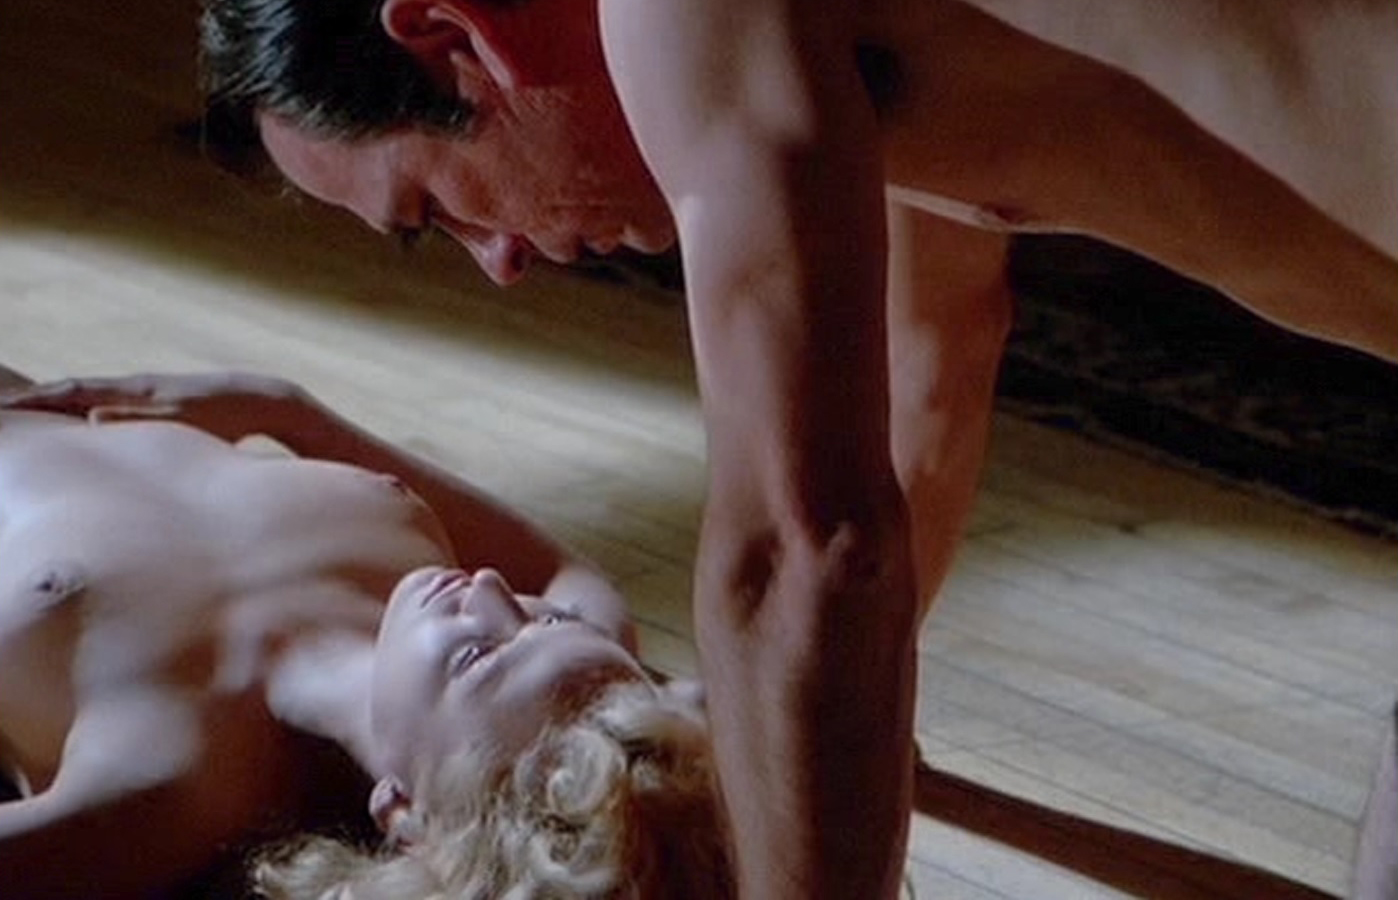 Virginia Madsen Nude Scene In Gotham Movie Free Video 